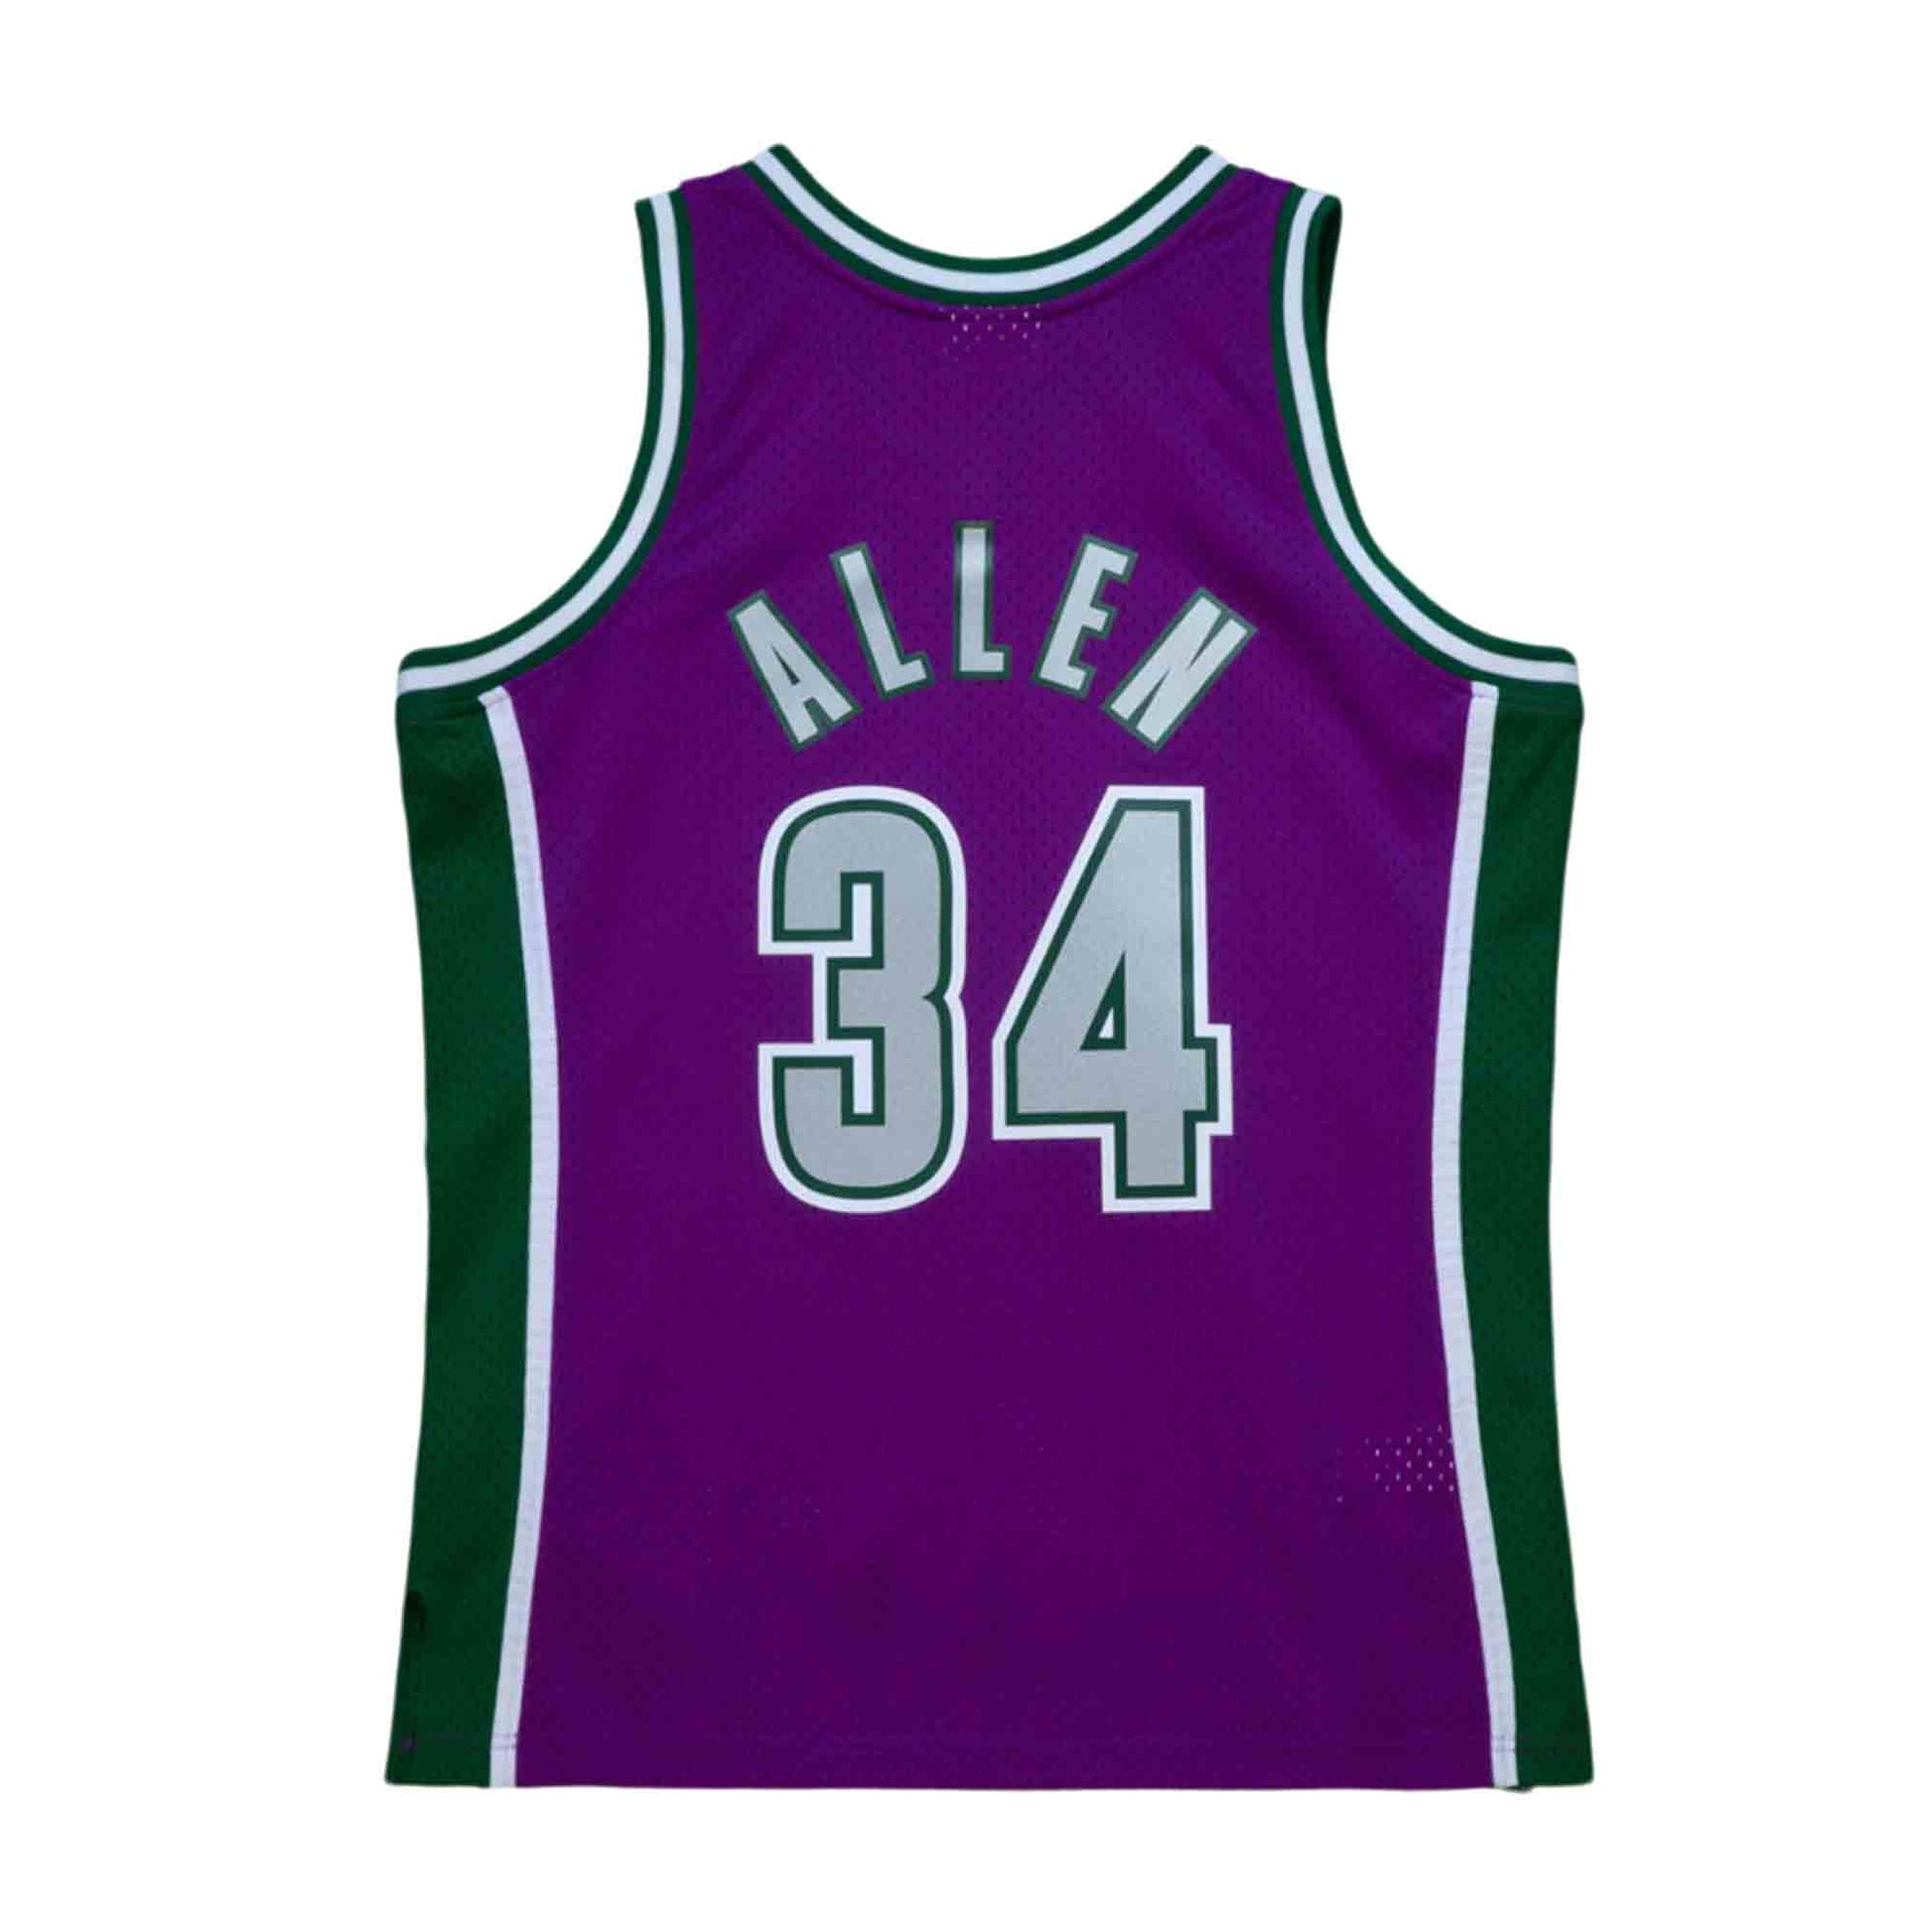 Ray Allen MENS Mitchell & Ness NBA Jersey Milwaukee Bucks